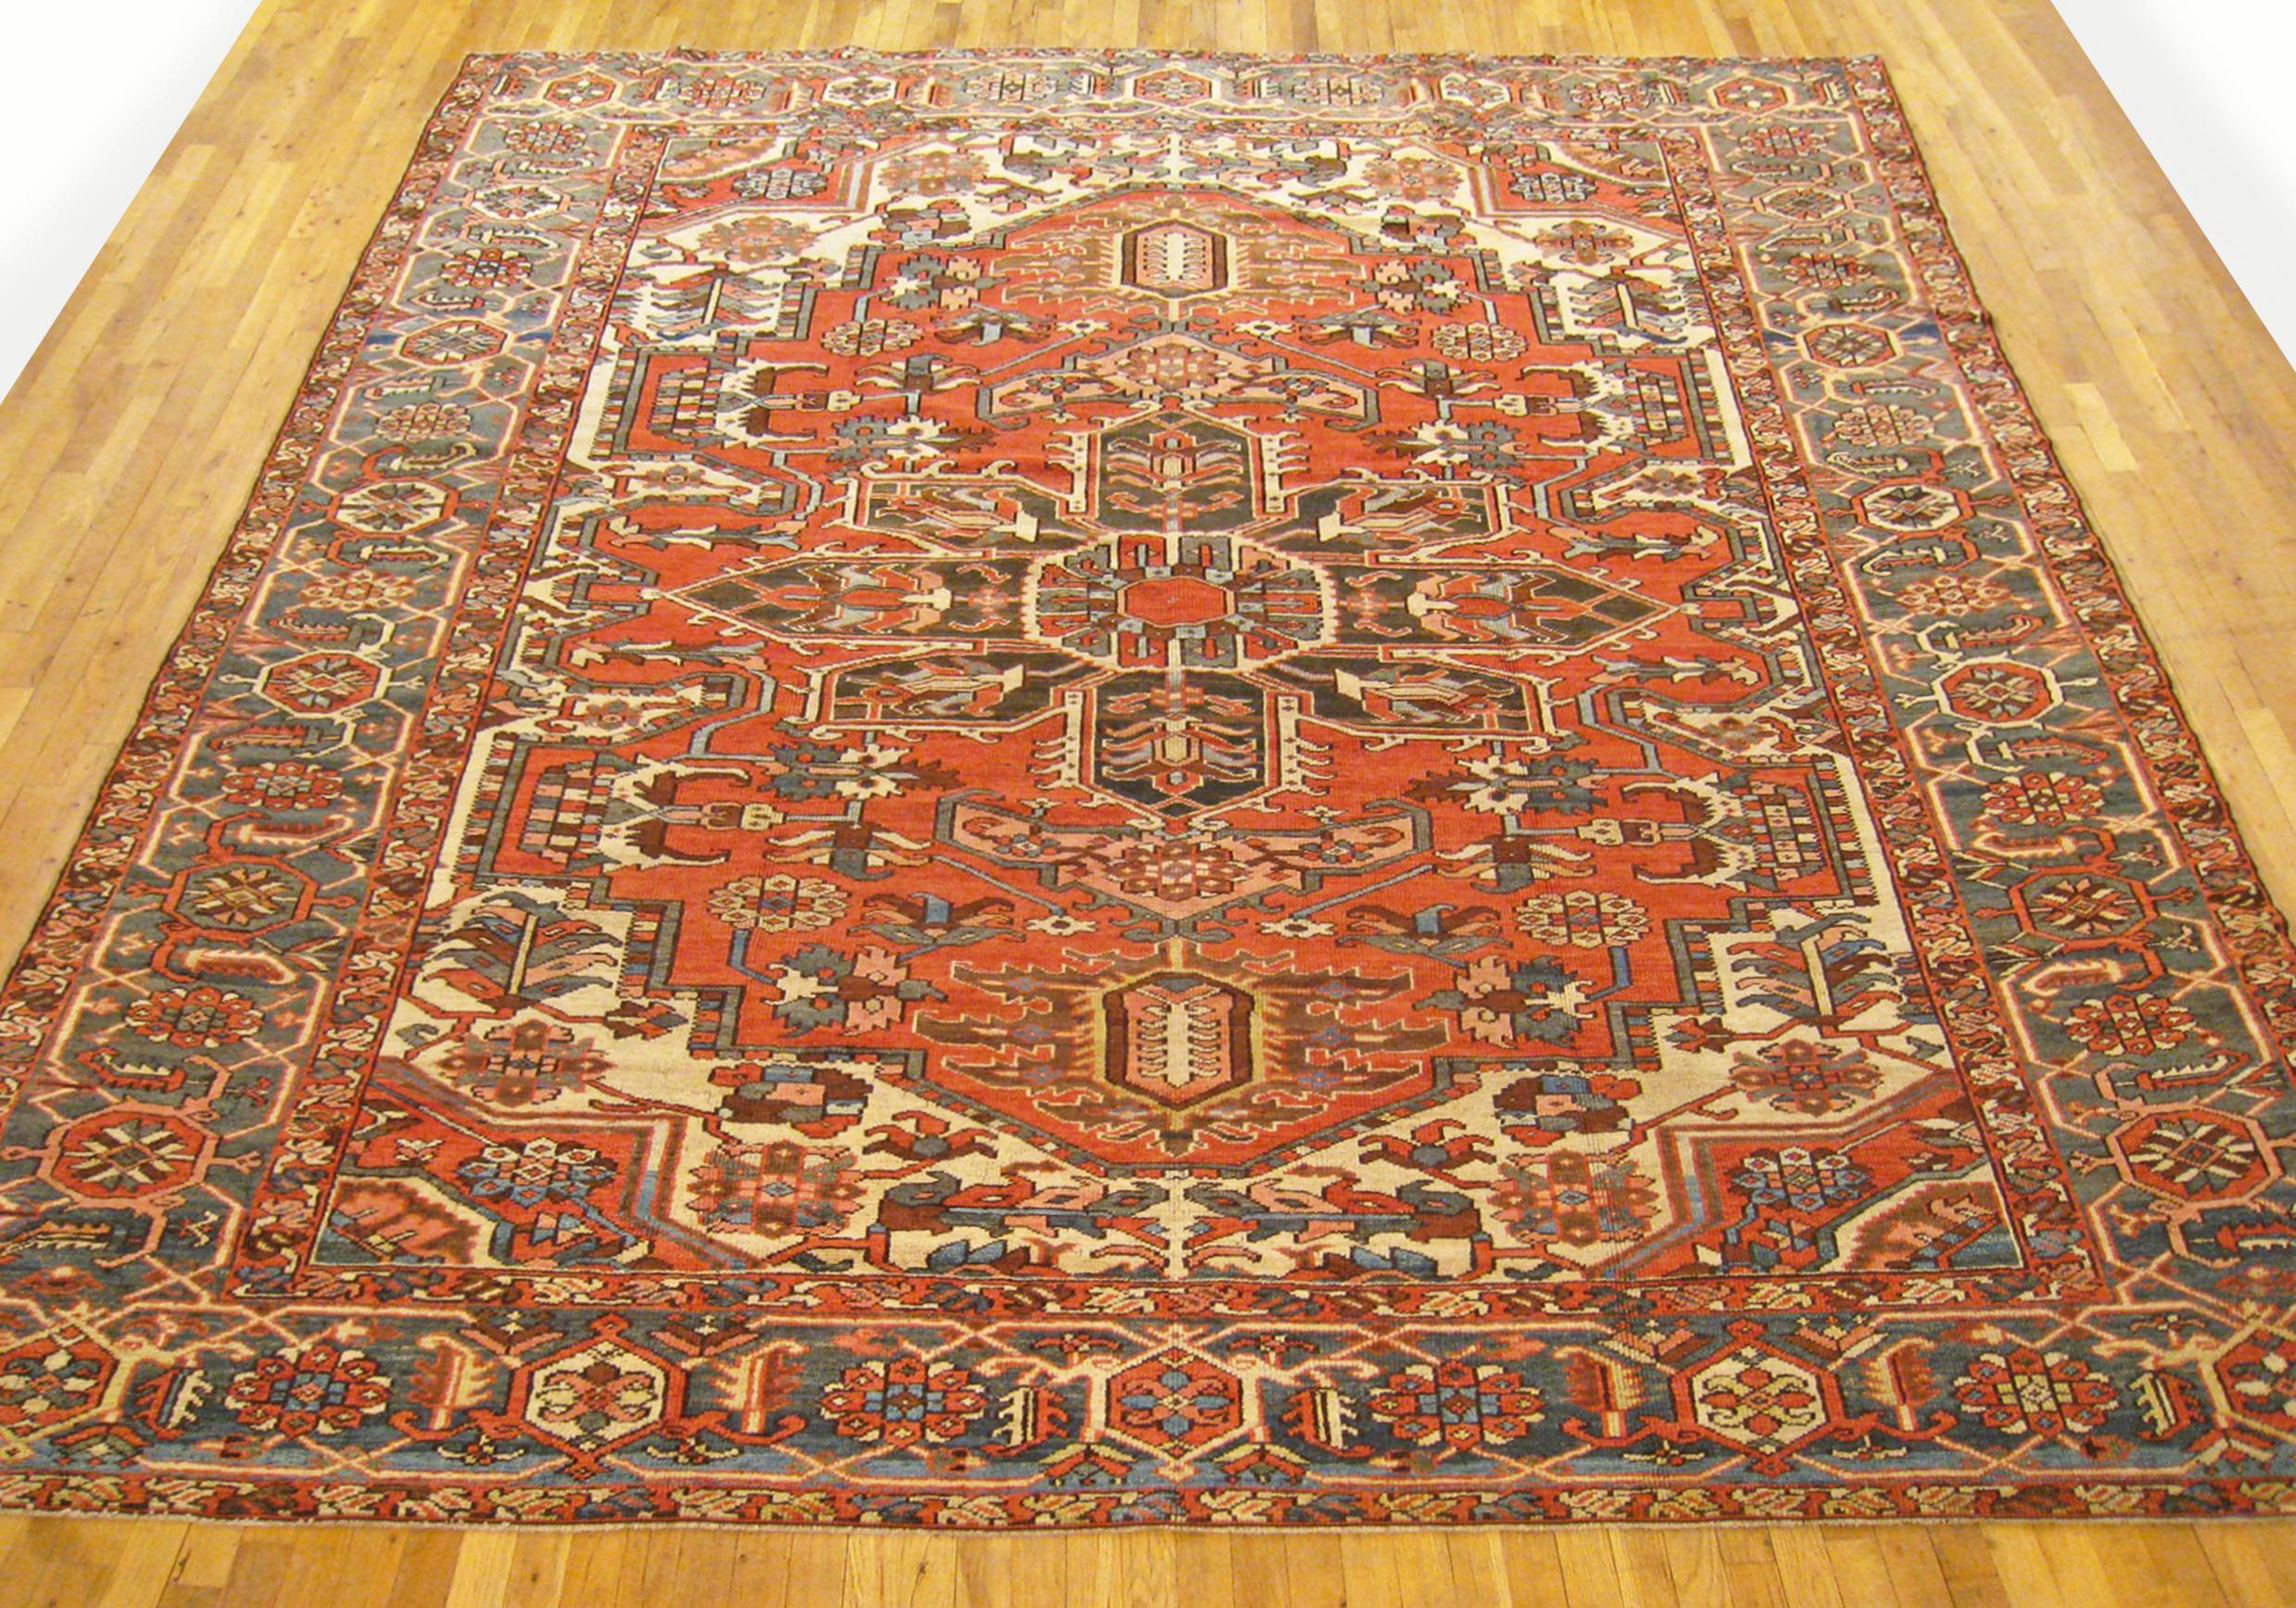 Antique Persian Heriz Serapi Oriental rug, Room size

An antique Persian Heriz Serapi oriental rug, size 12'6